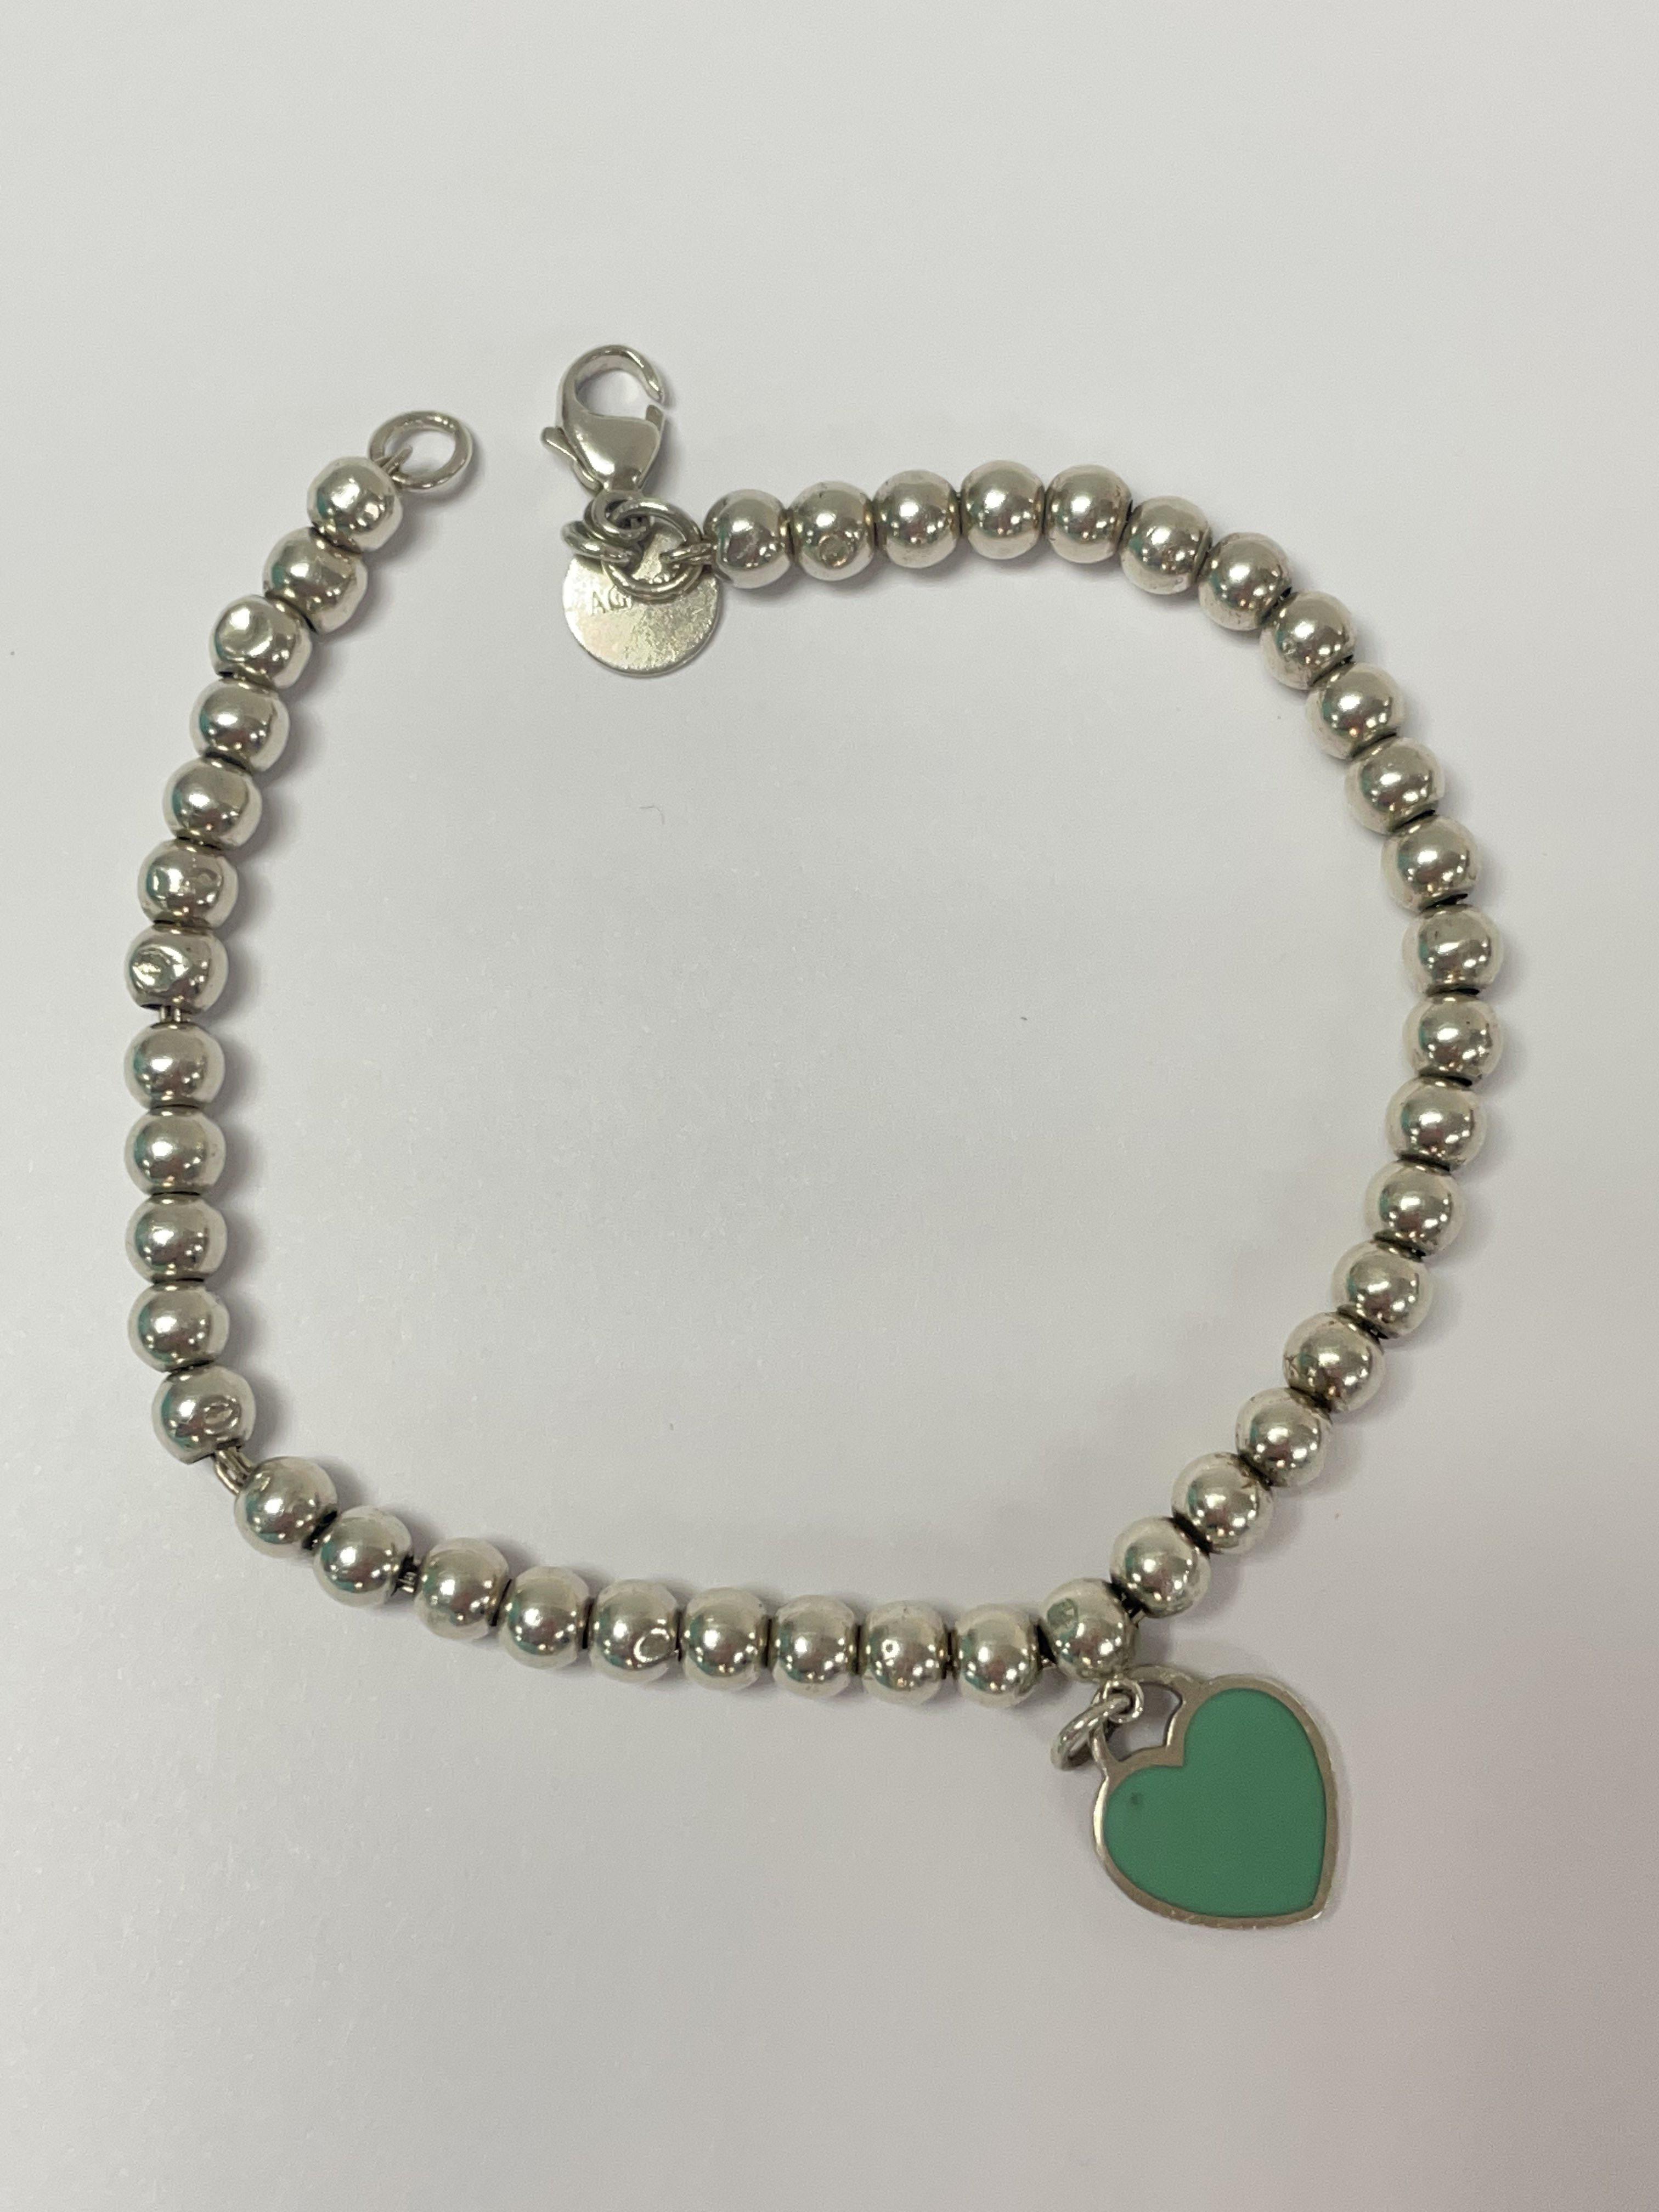 A Tiffany & Co Blue Heart Tag Bead Bracelet - Image 2 of 2